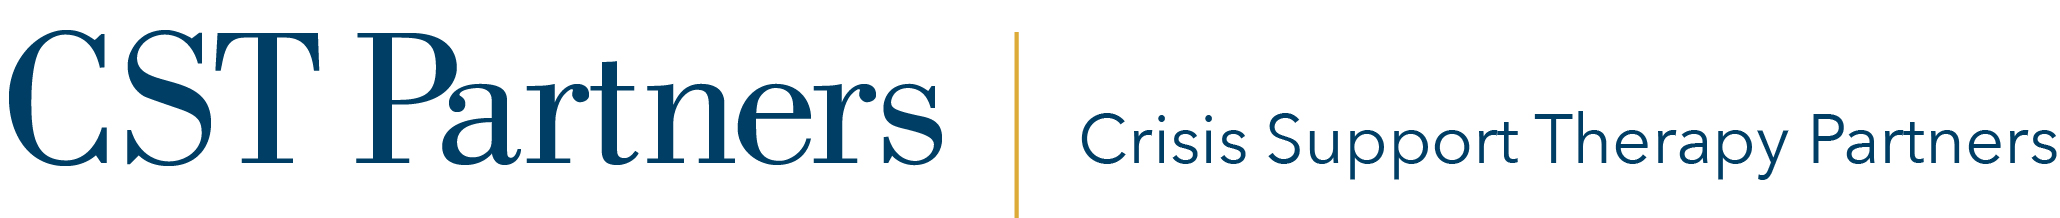 CST Partners logo